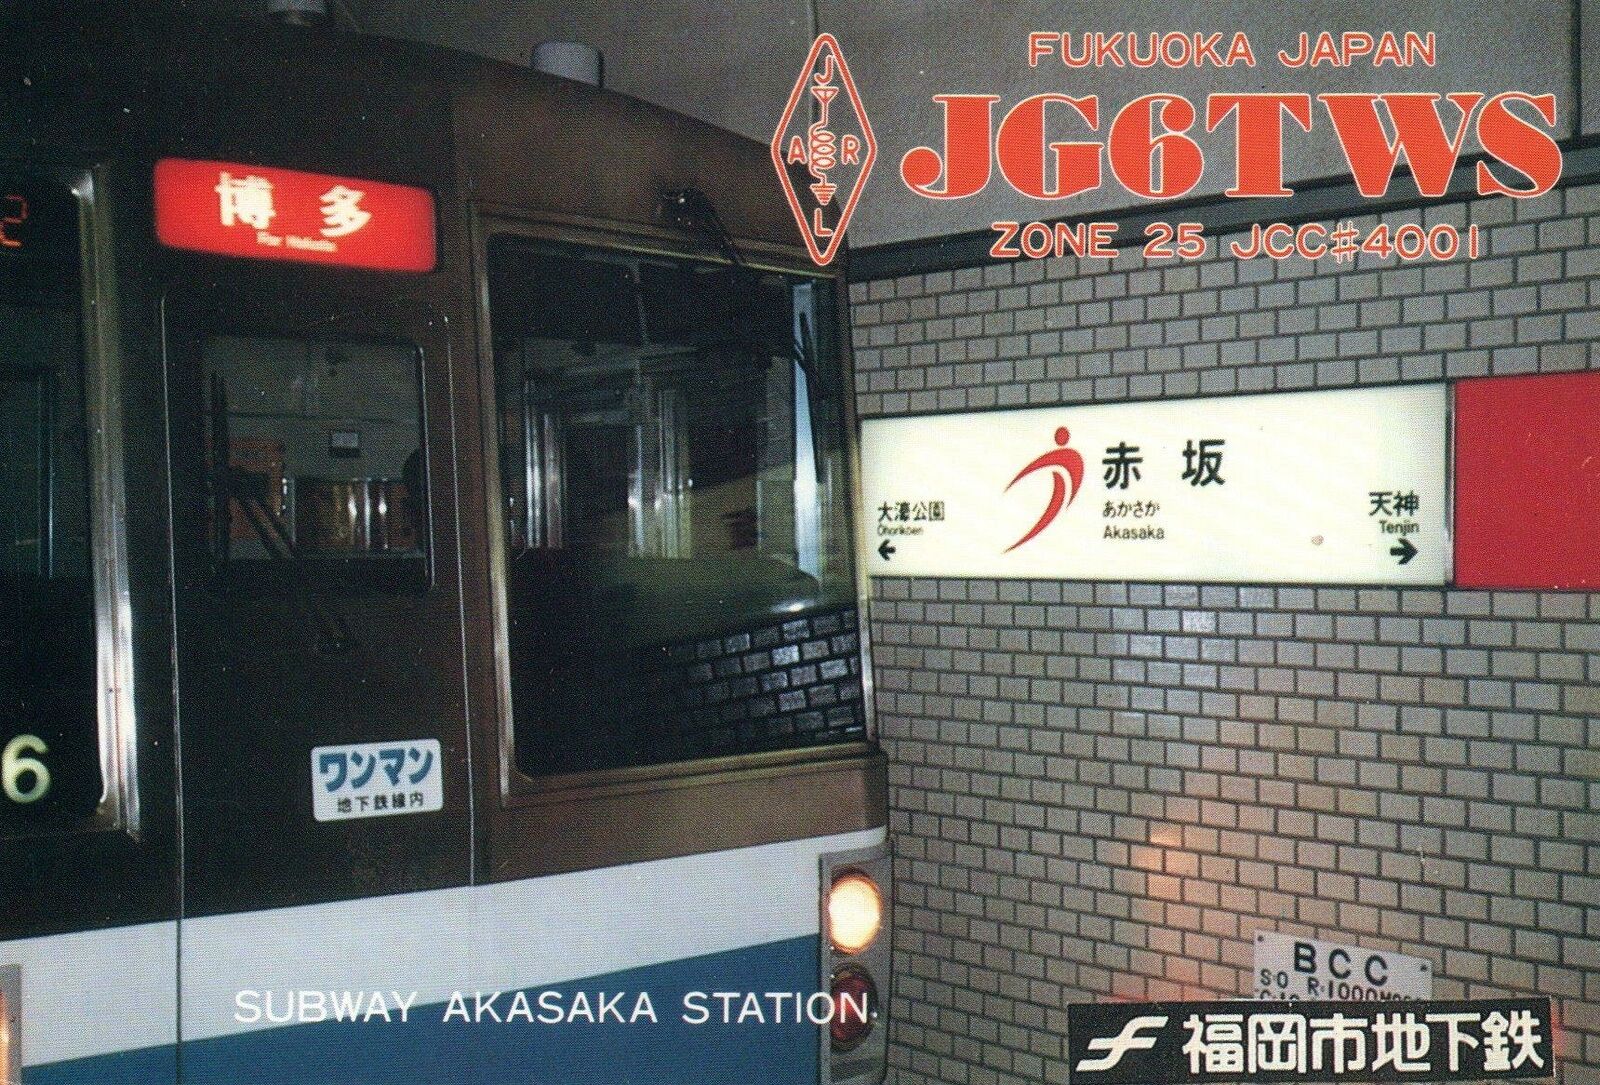 1989 VINTAGE SUBWAY AKASAKA STATION FUKUOKA JAPAN QSL HAM RADIO CARD POSTCARD